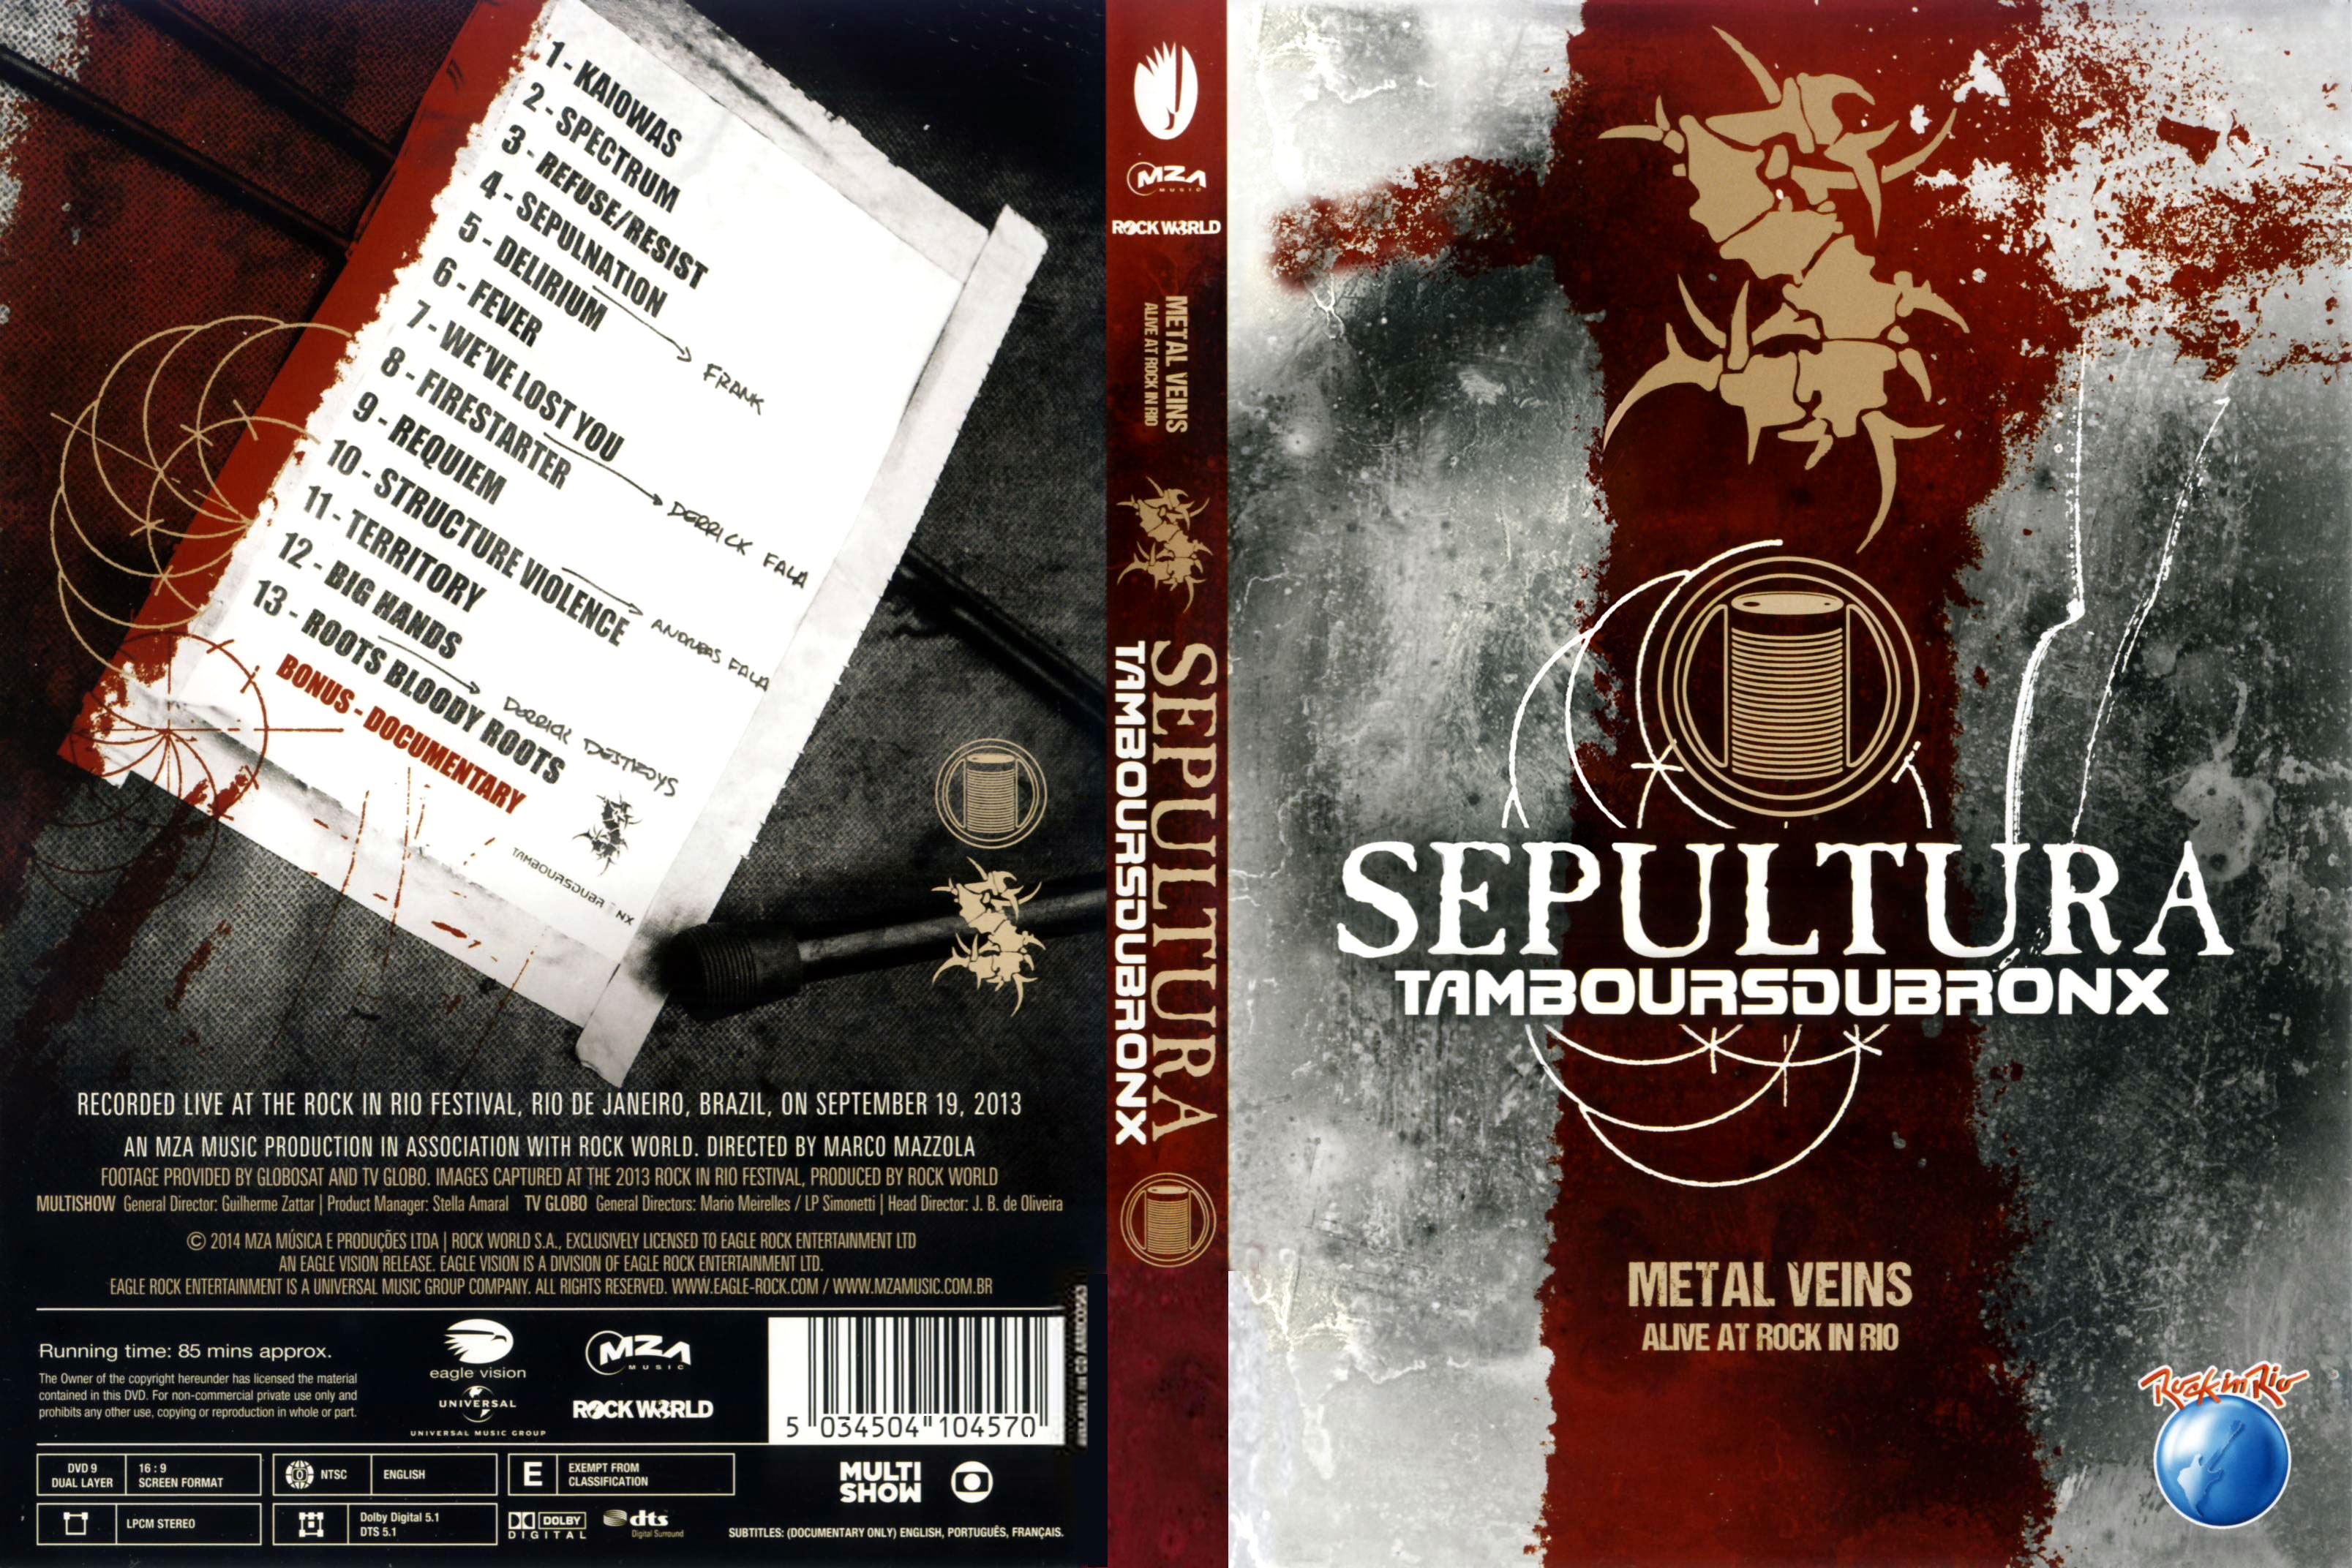 Jaquette DVD Sepultura Tambour du Bronx